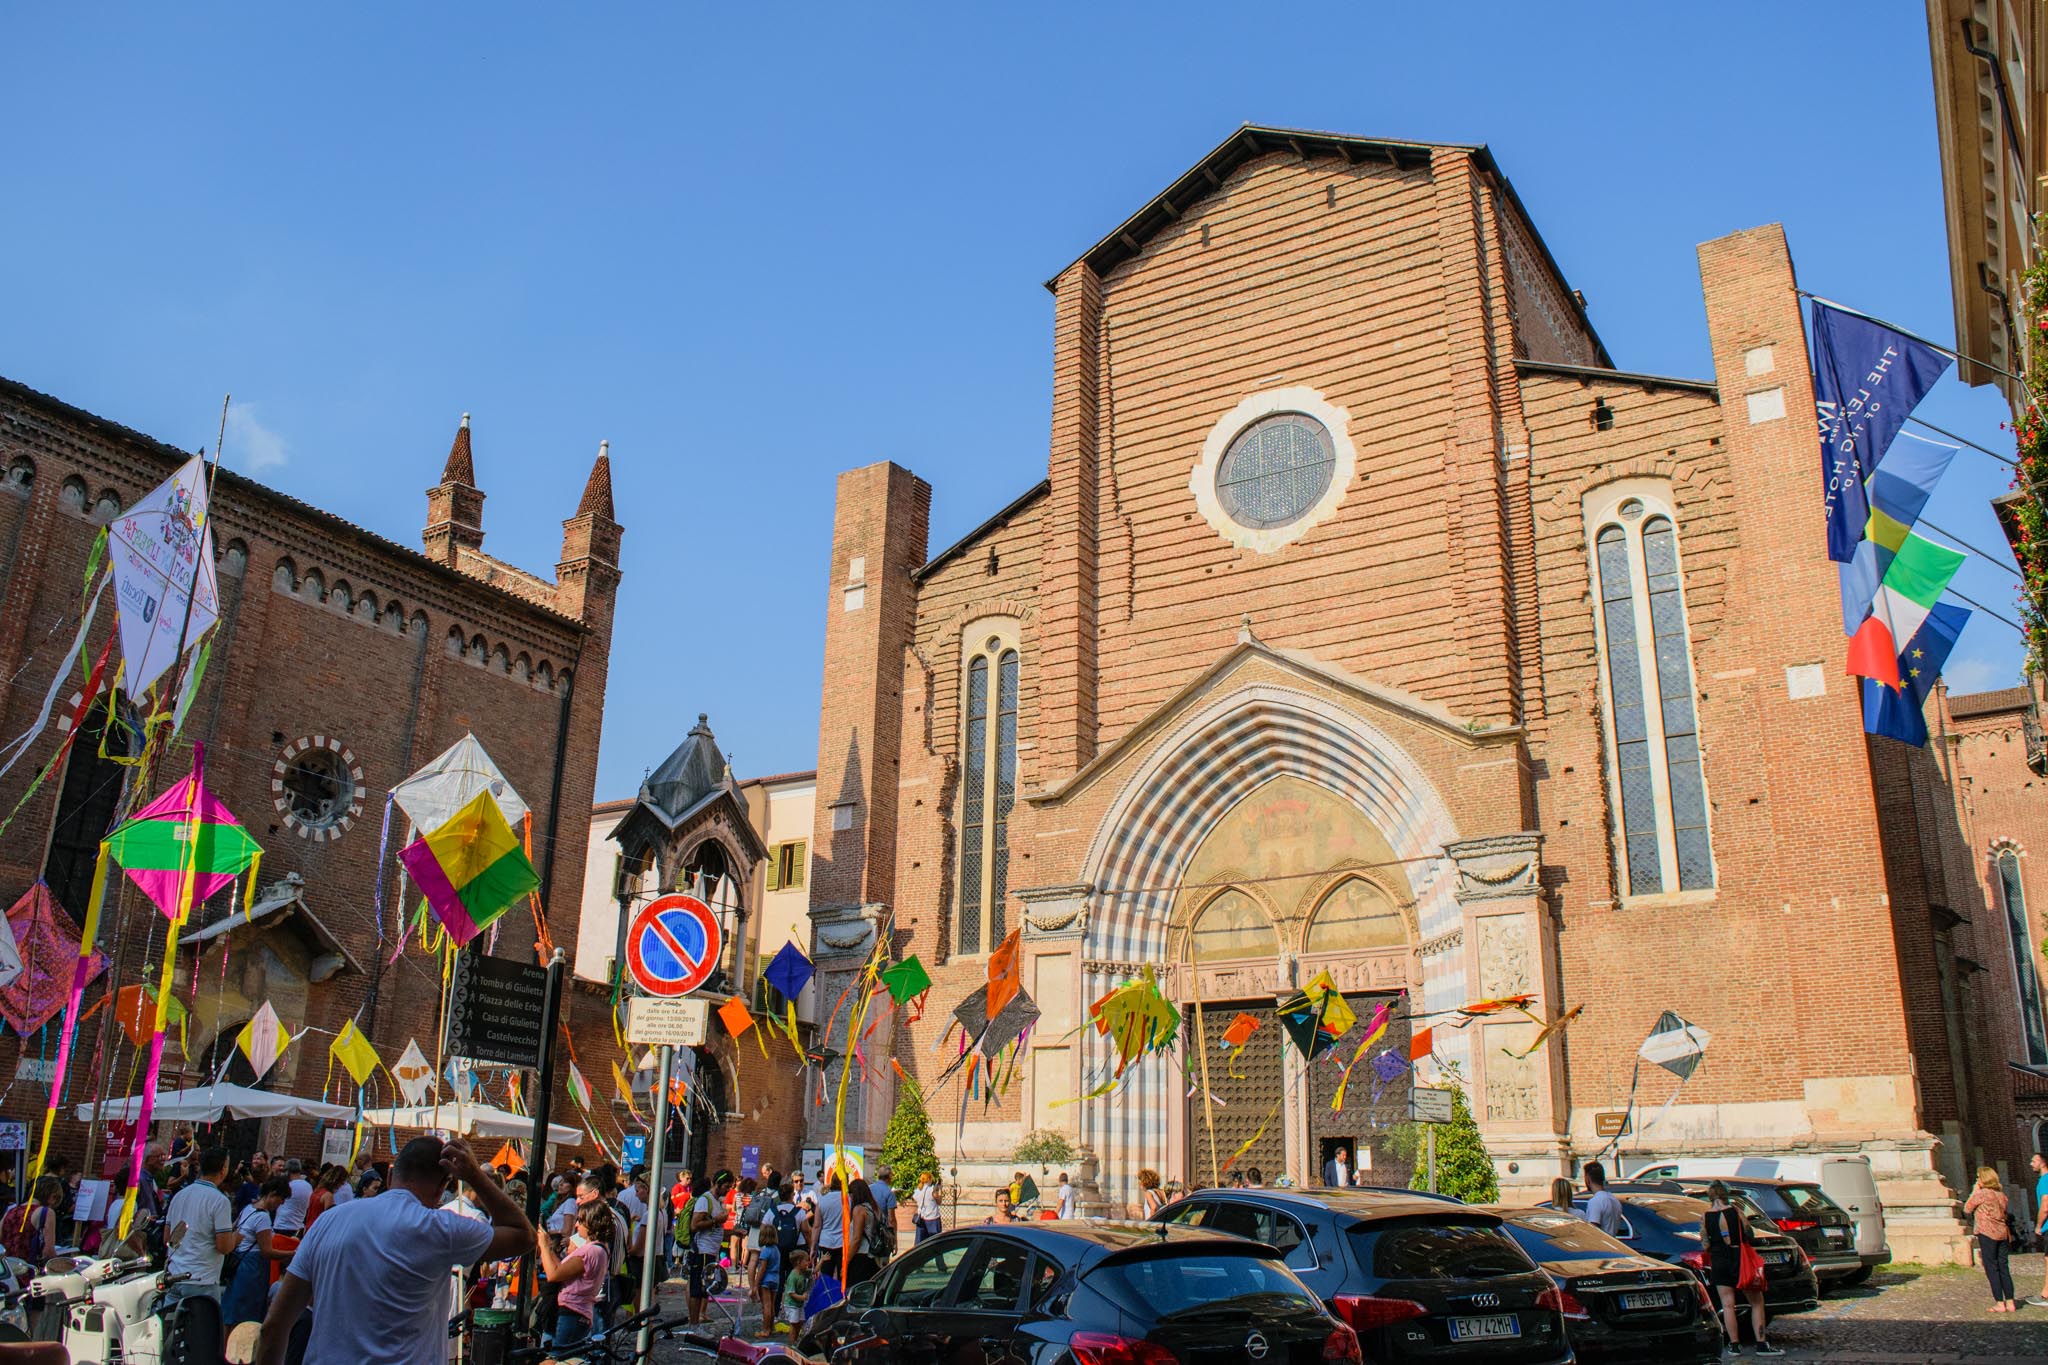 Basilica di Santa Anastasia - Verona